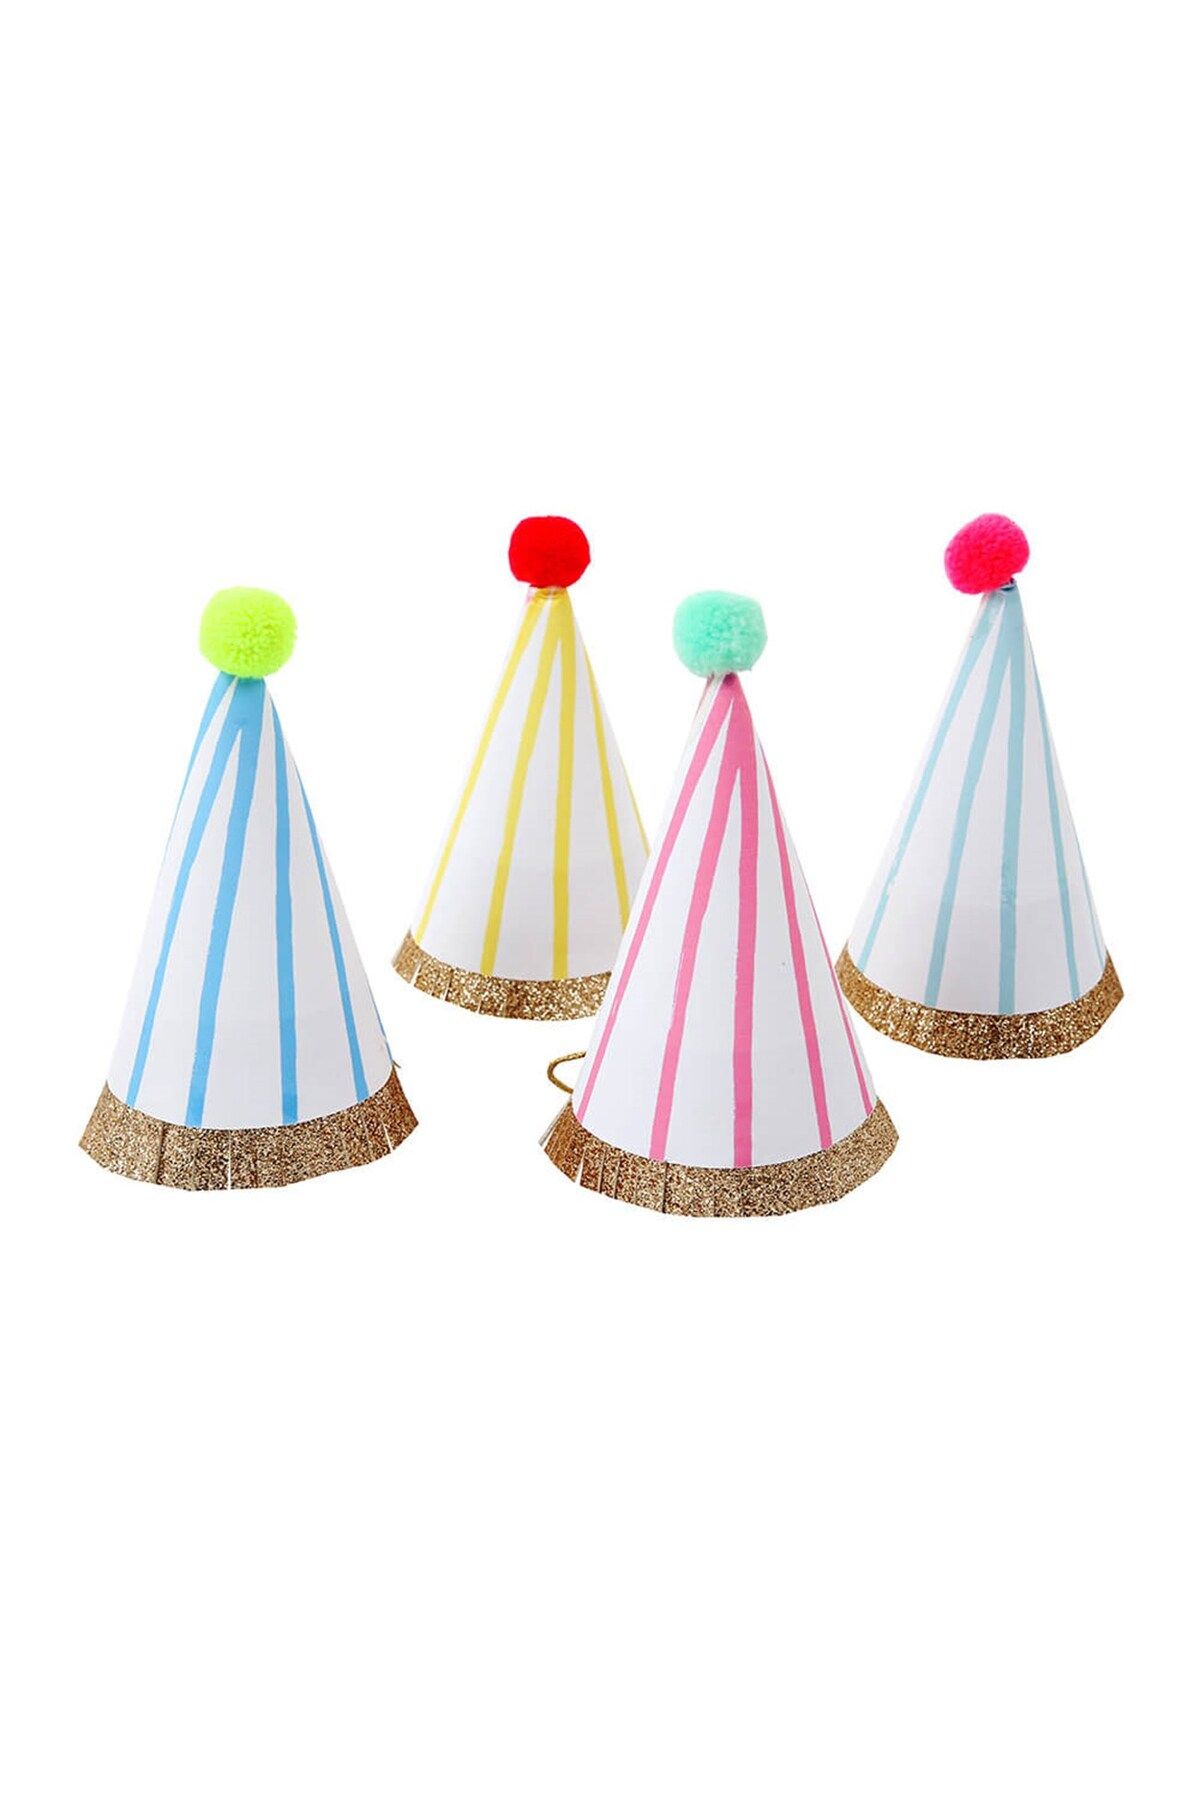 Meri Meri - Stripe & Pompom Mini Party Hats - Çizgili & Ponponlu Mini Parti Şapkaları